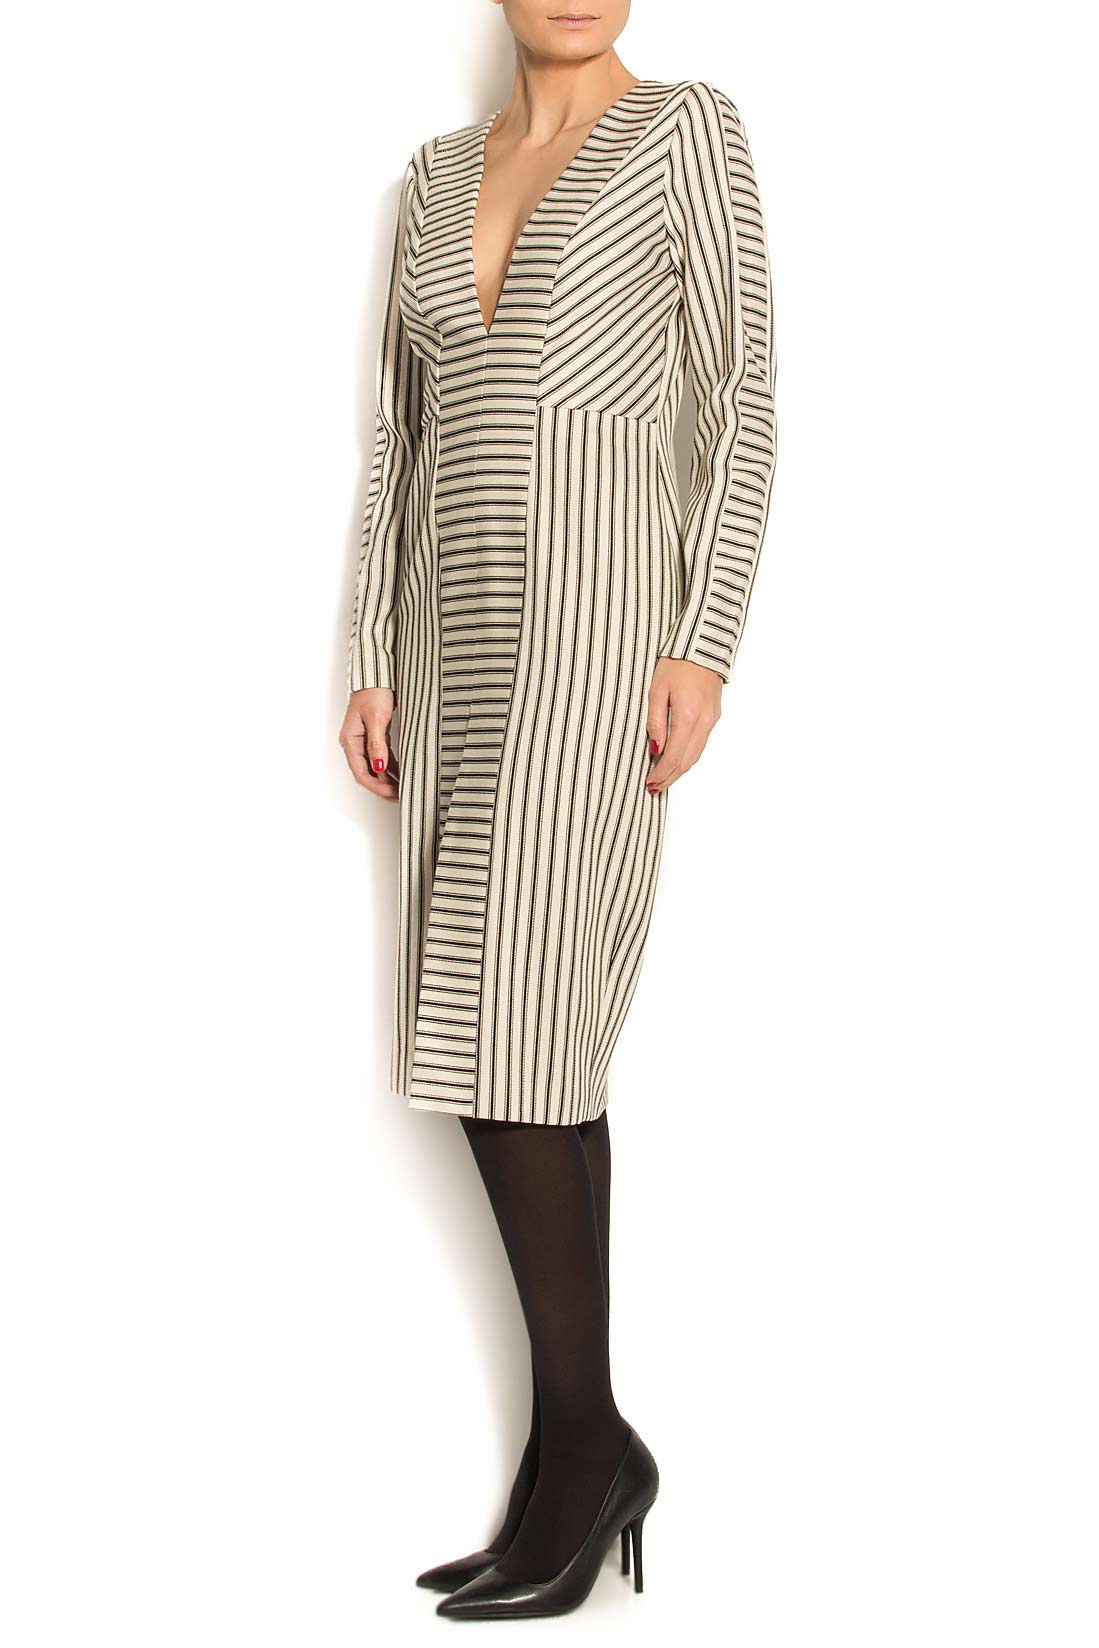 Striped cotton mini dress ATU Body Couture image 1